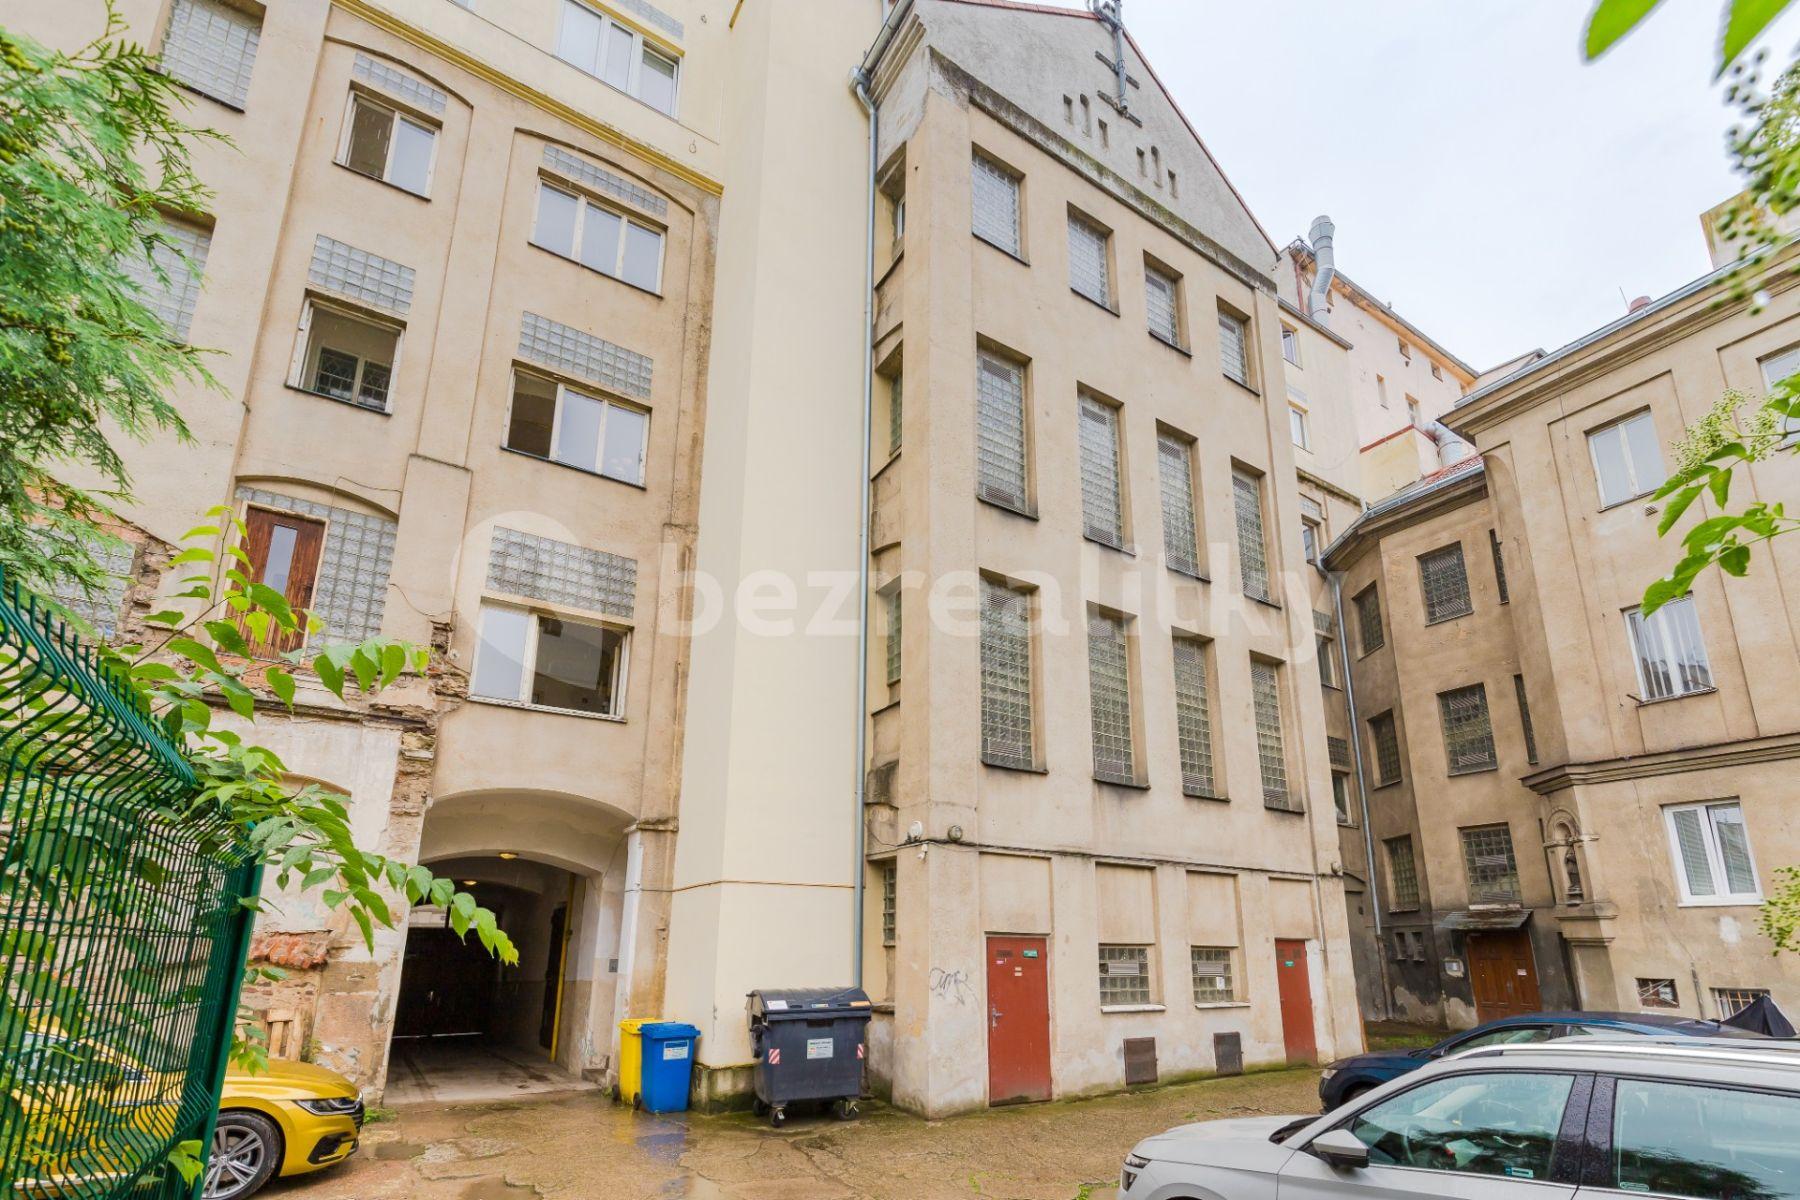 4 bedroom flat for sale, 91 m², Lidická, Prague, Prague